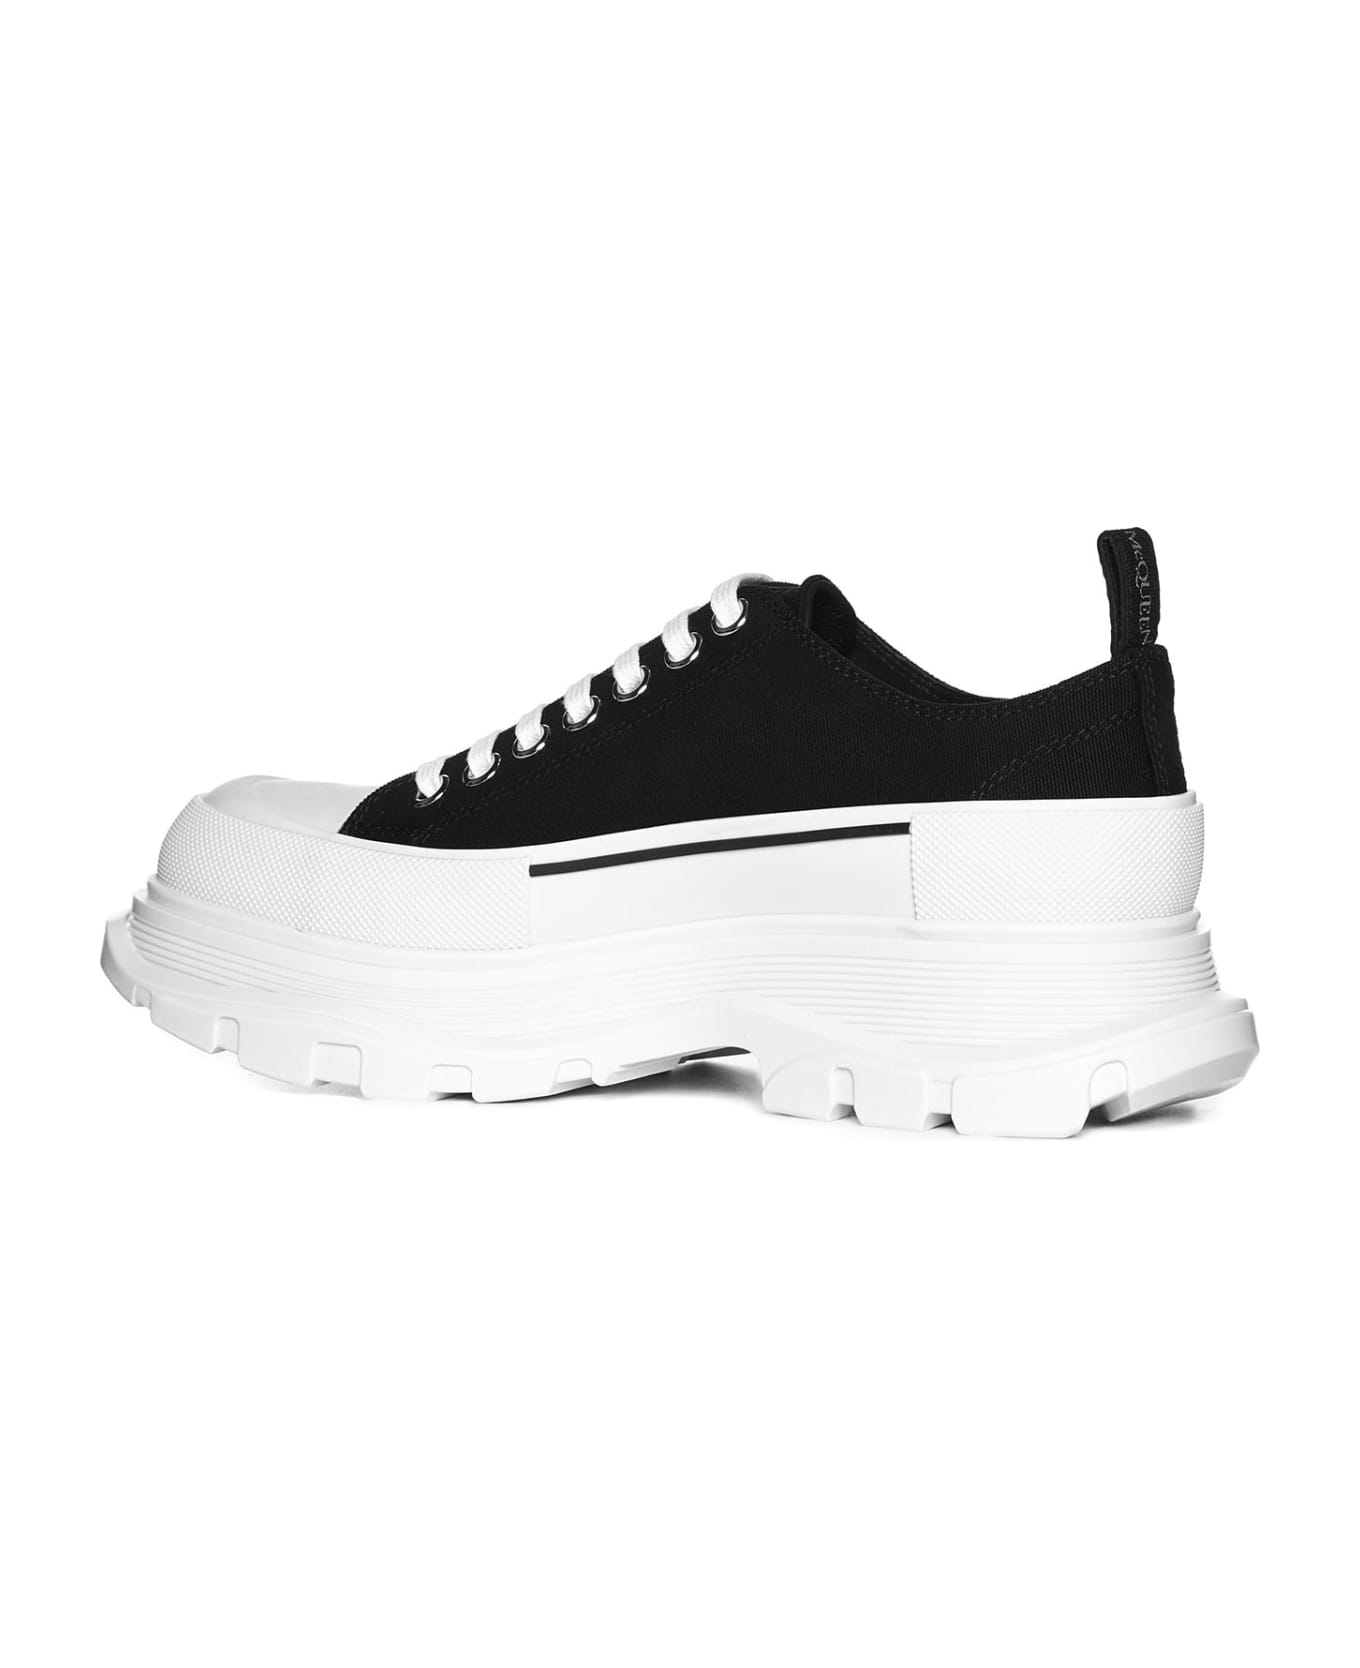 Alexander McQueen Sneaker Tread Slick - Black/white